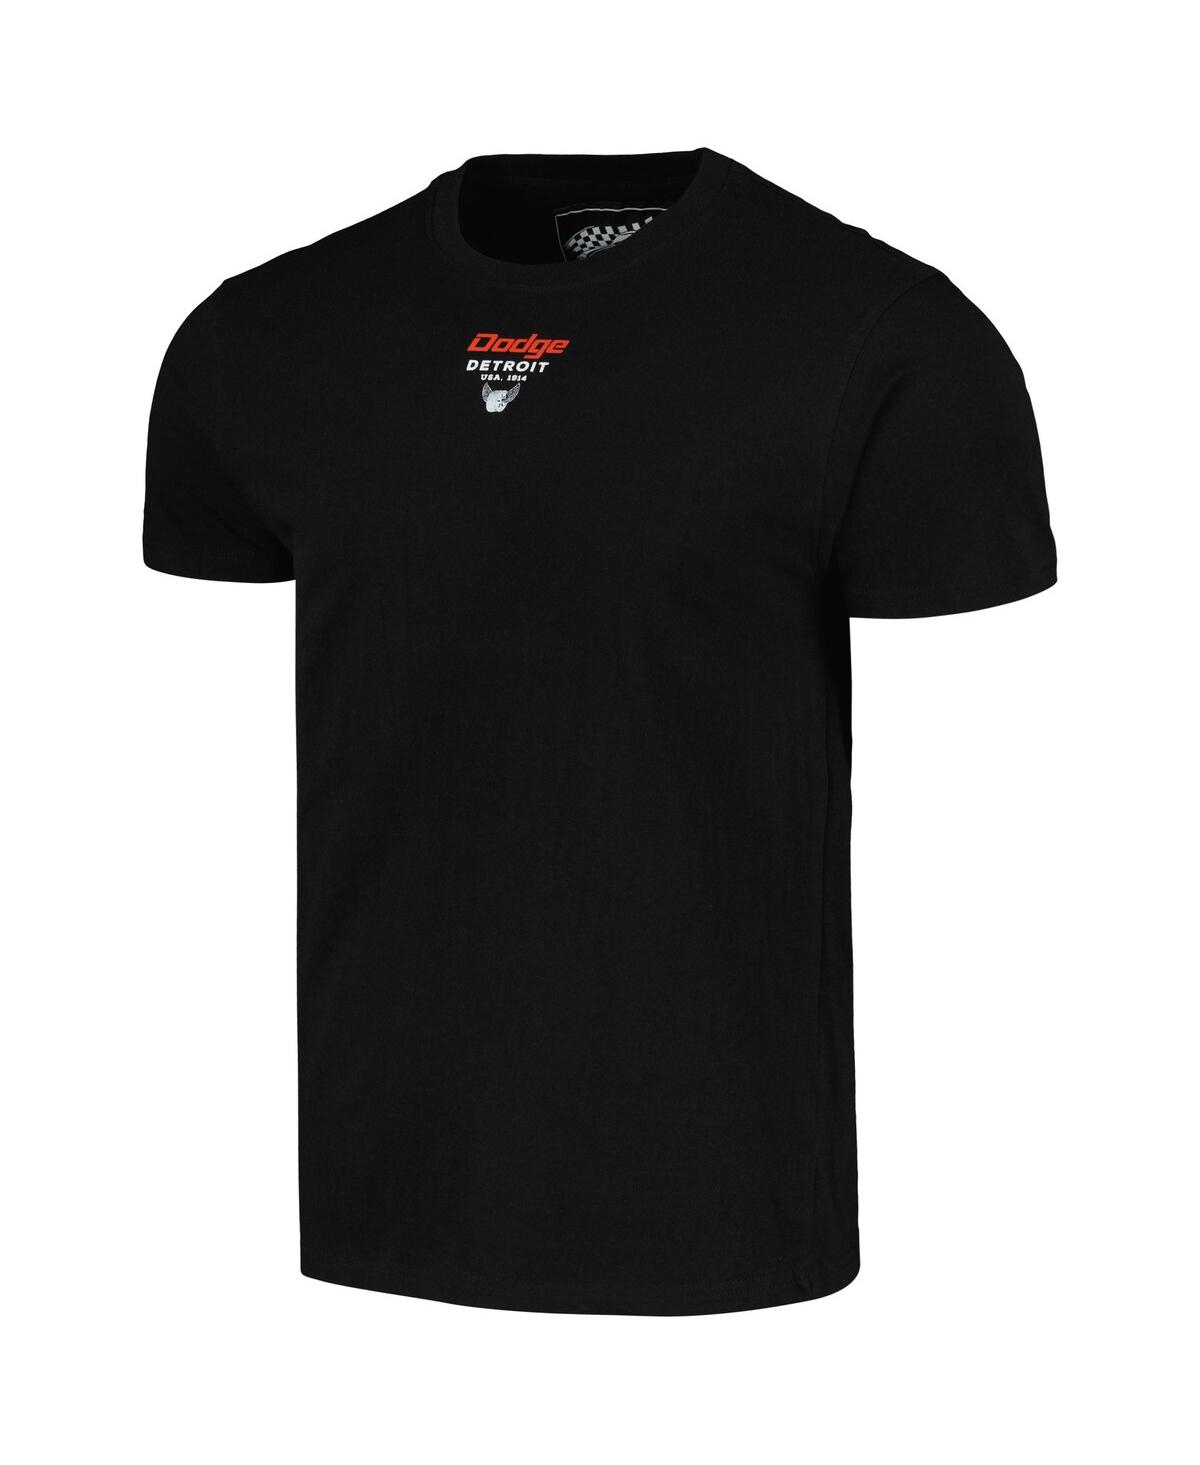 Shop Reason Men's Black Dodge An American Revolution Graphic T-shirt